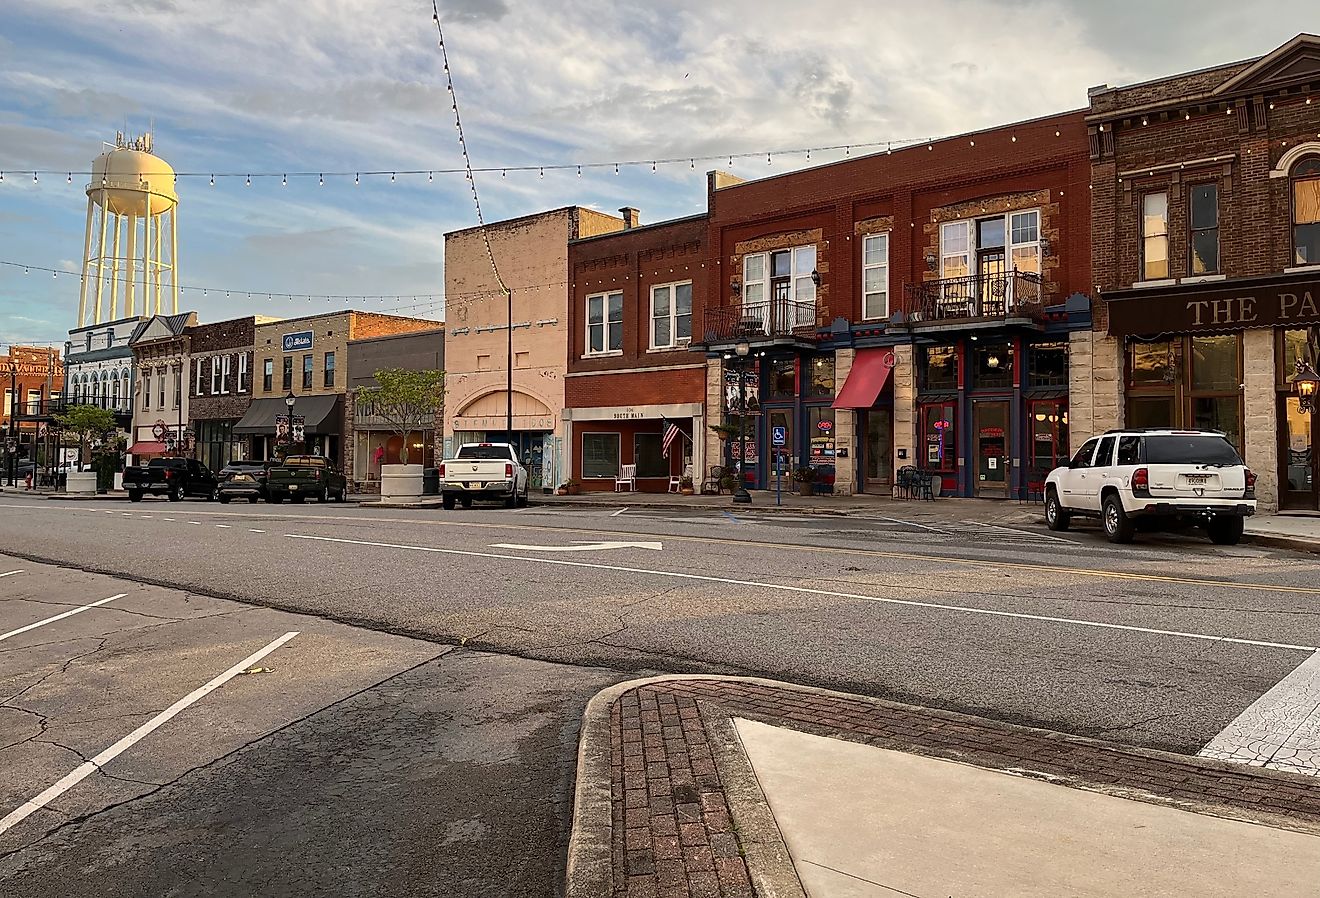 Downtown Tuscumbia, Alabama in the summer. Image credit Luisa P Oswalt via Shutterstock